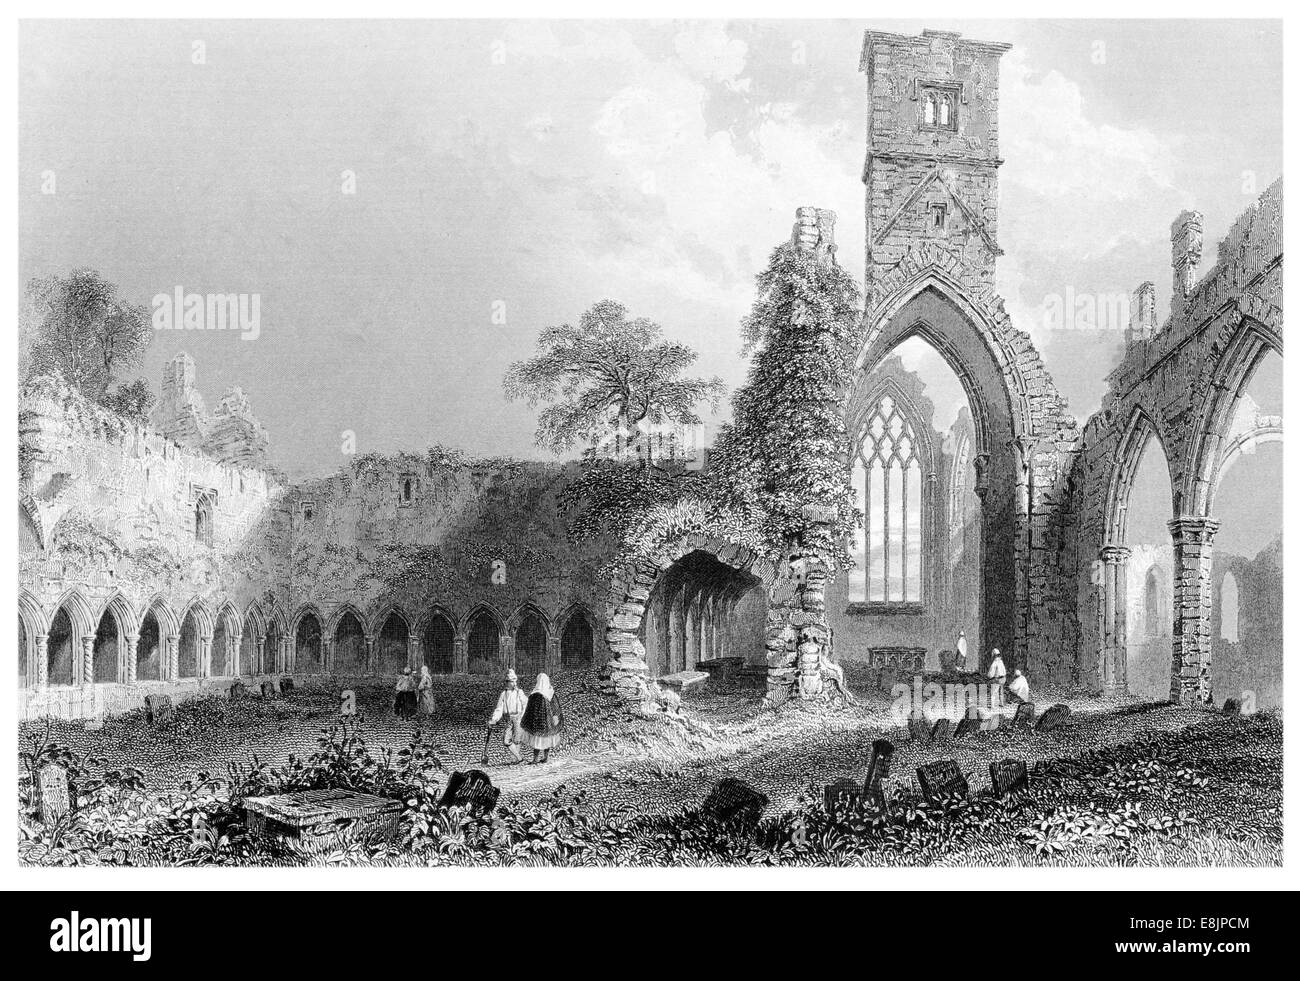 Abtei von Sligo County Sligo Irland Eire irischer um 1840 Stockfoto